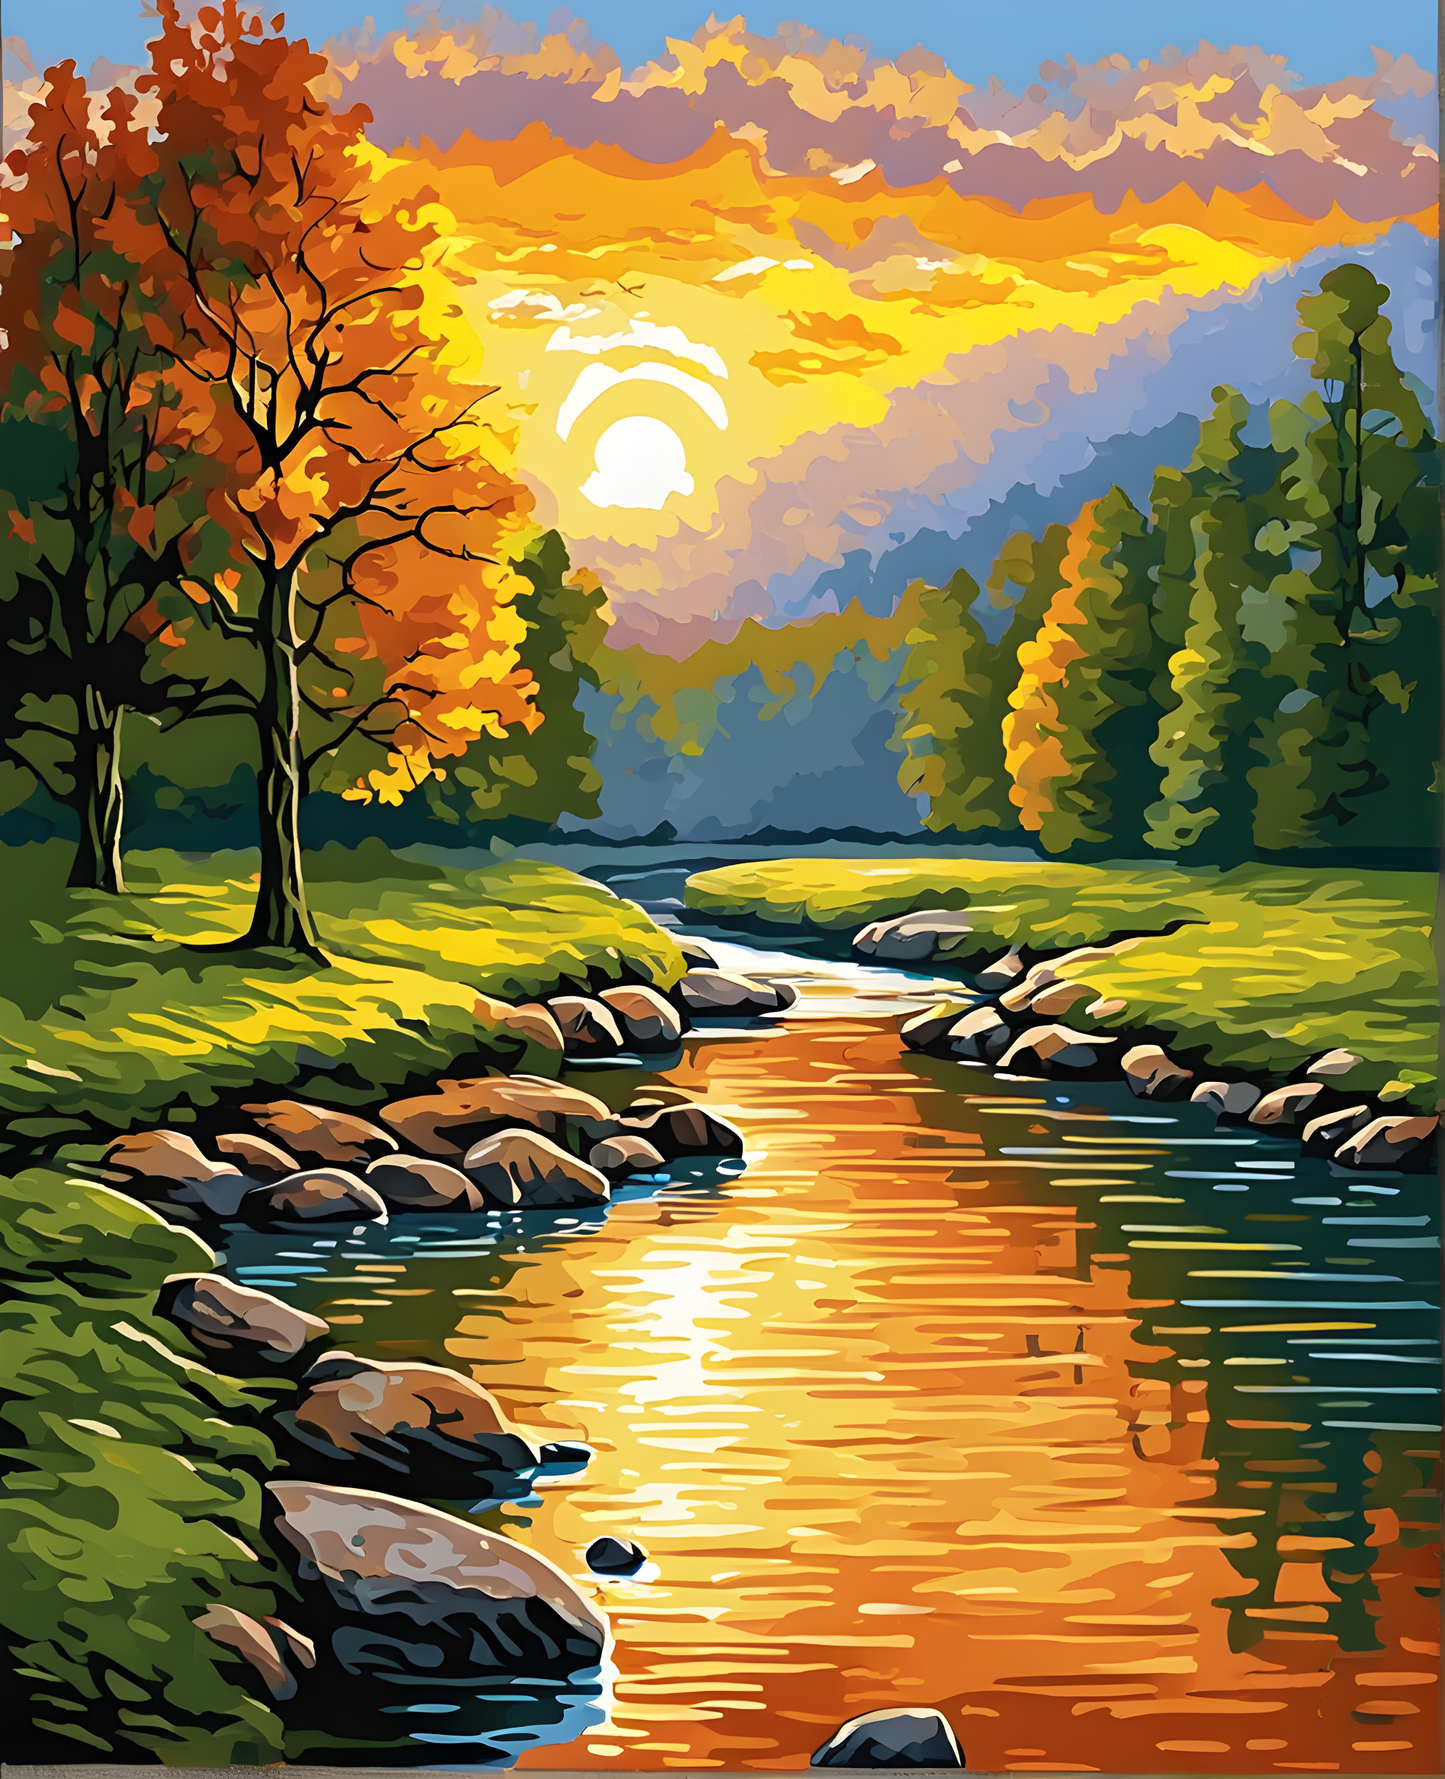 River Sunrise (2) - Van-Go Paint-By-Number Kit